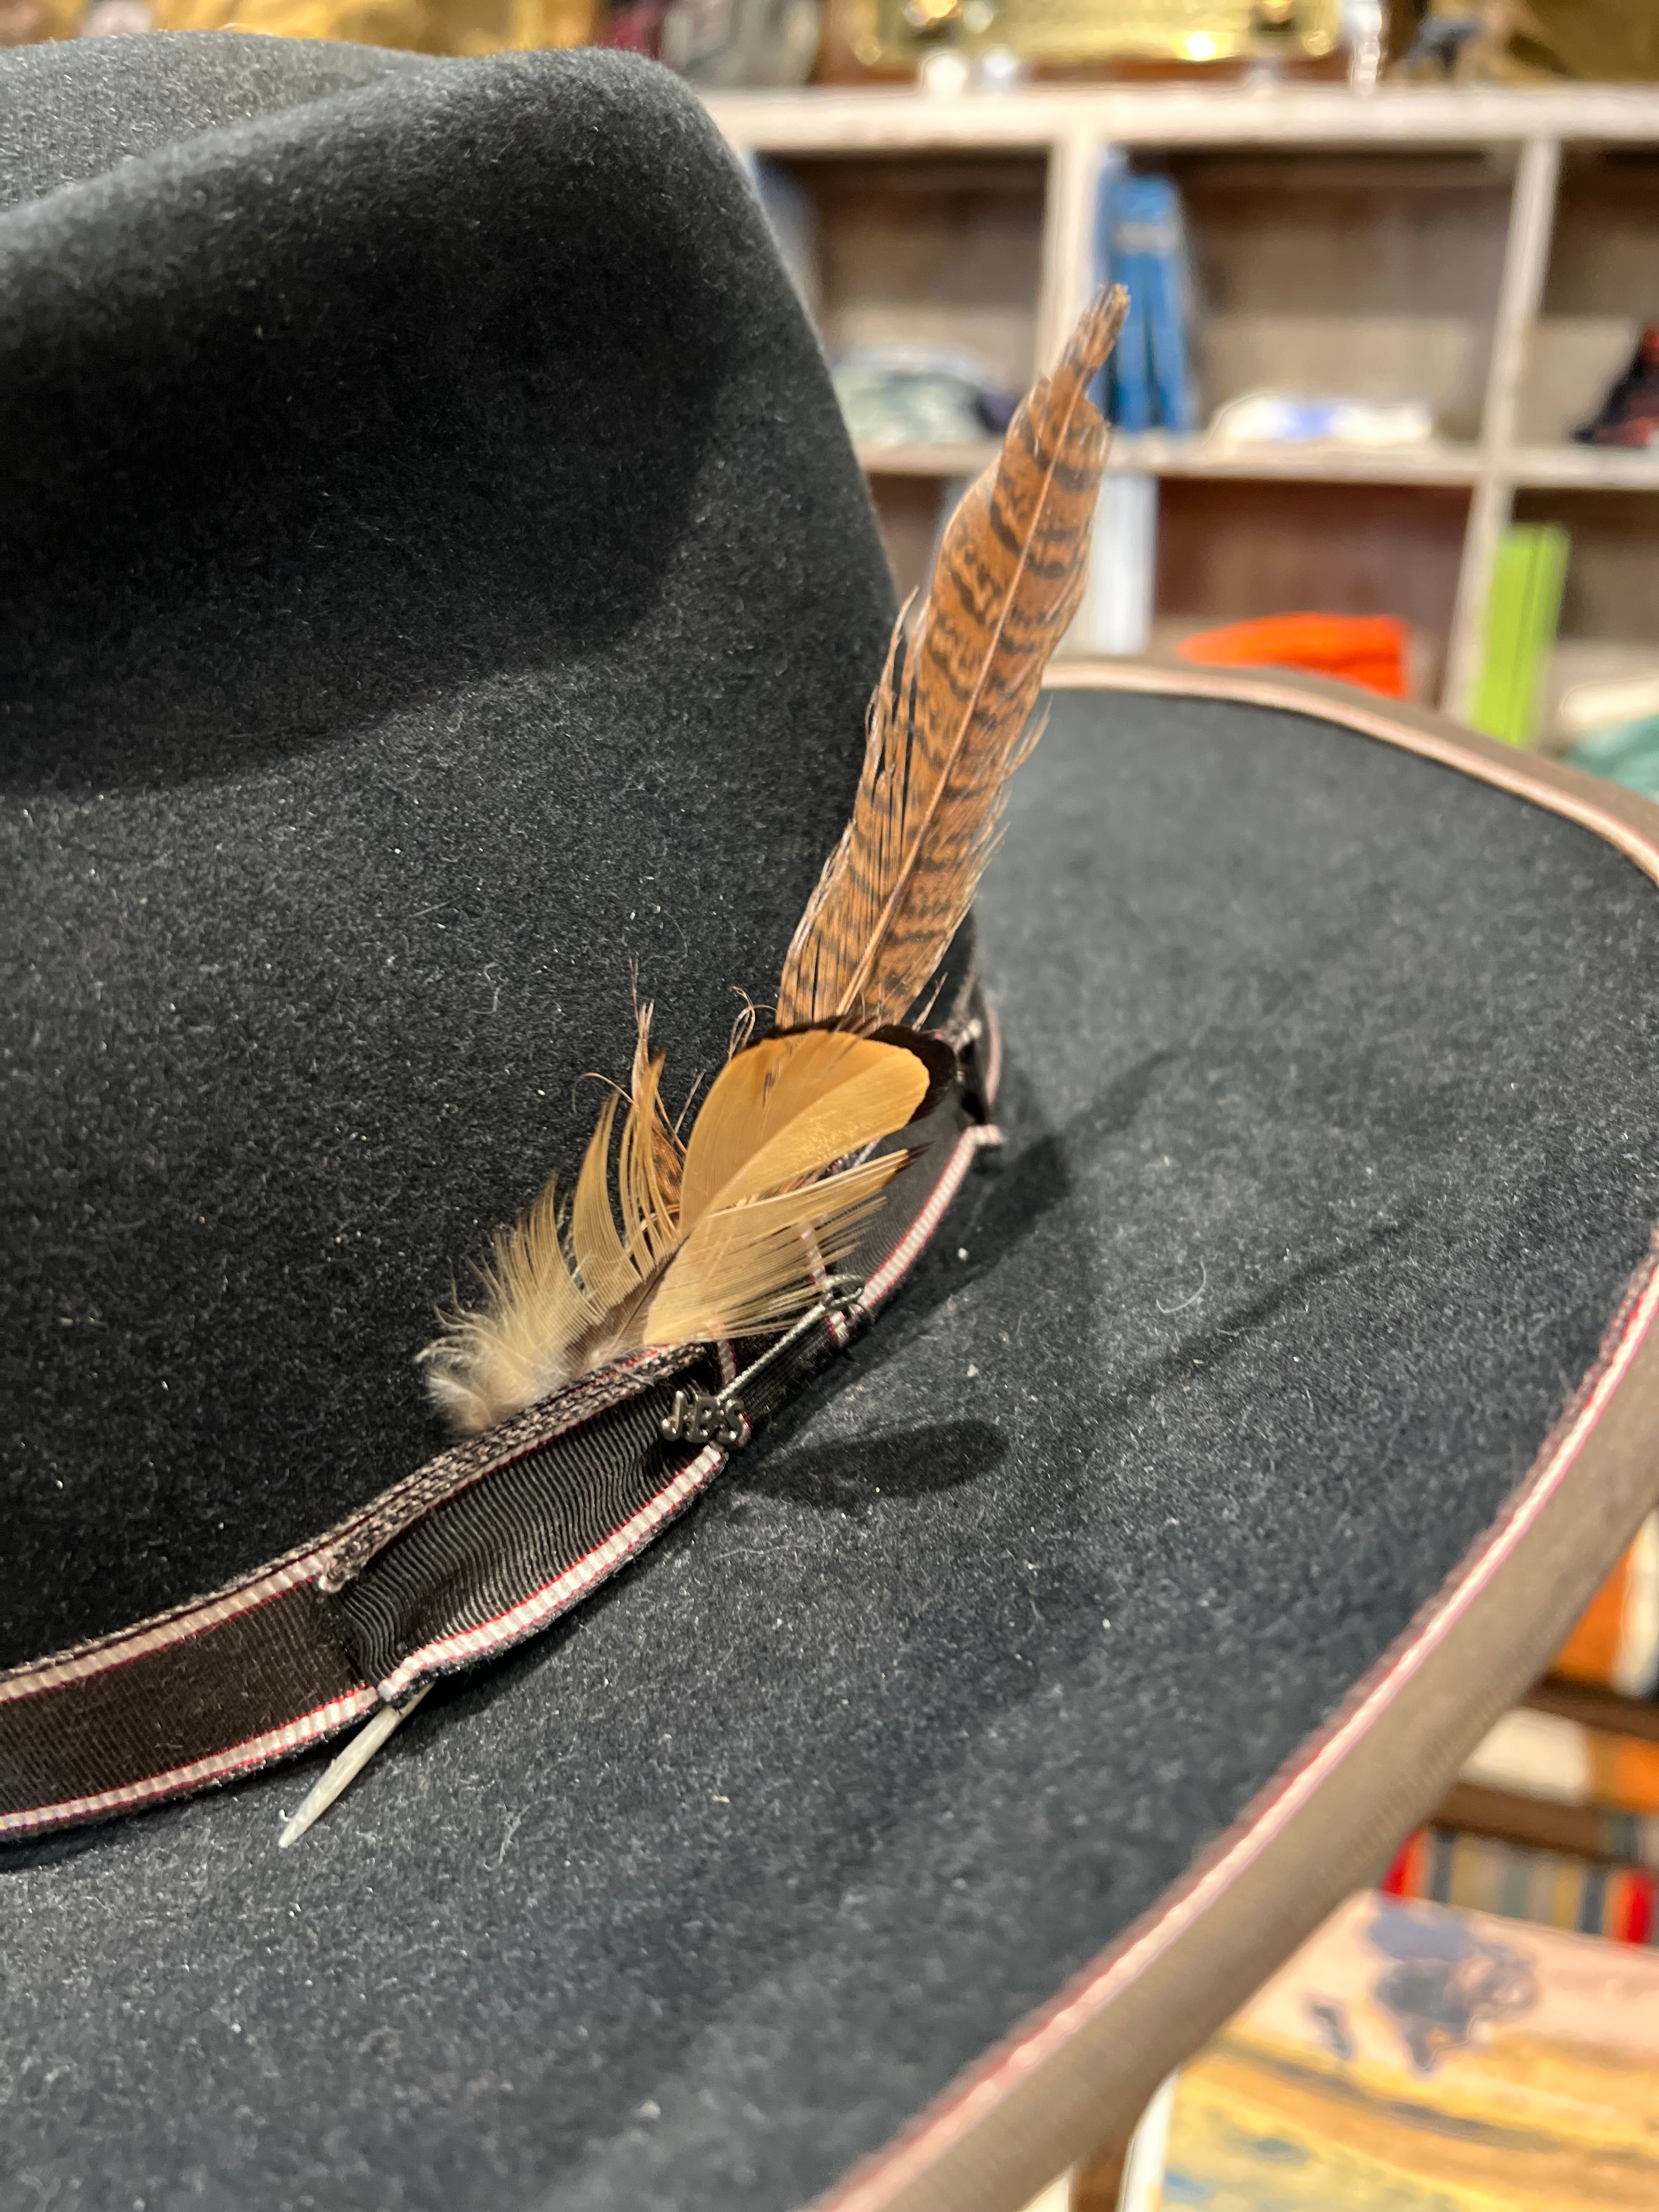 Stetson Black 4X Beaver Felt Cowboy Hat Size 7 1/4